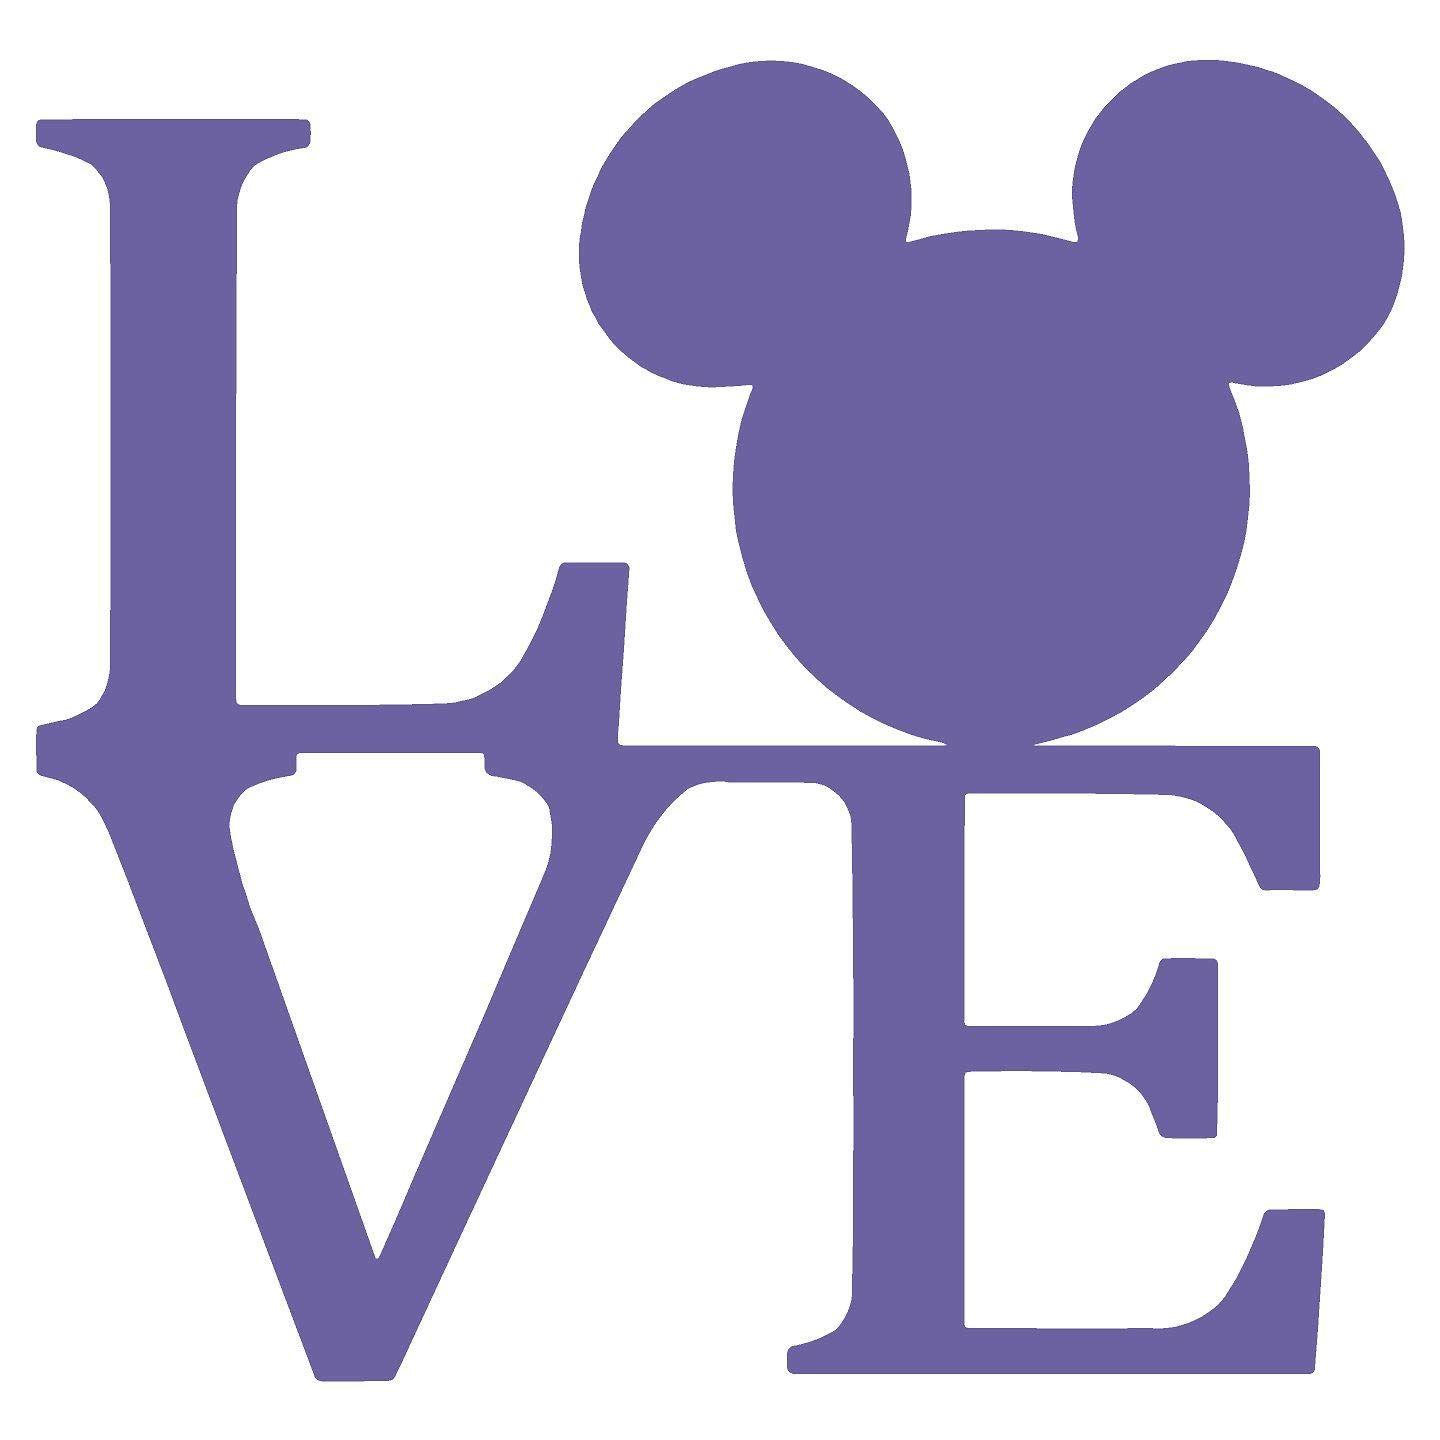 Mickey Mouse Ears Logo - Amazon.com: Crawford Graphix Mickey Mouse Ears Love Logo - Sticker ...